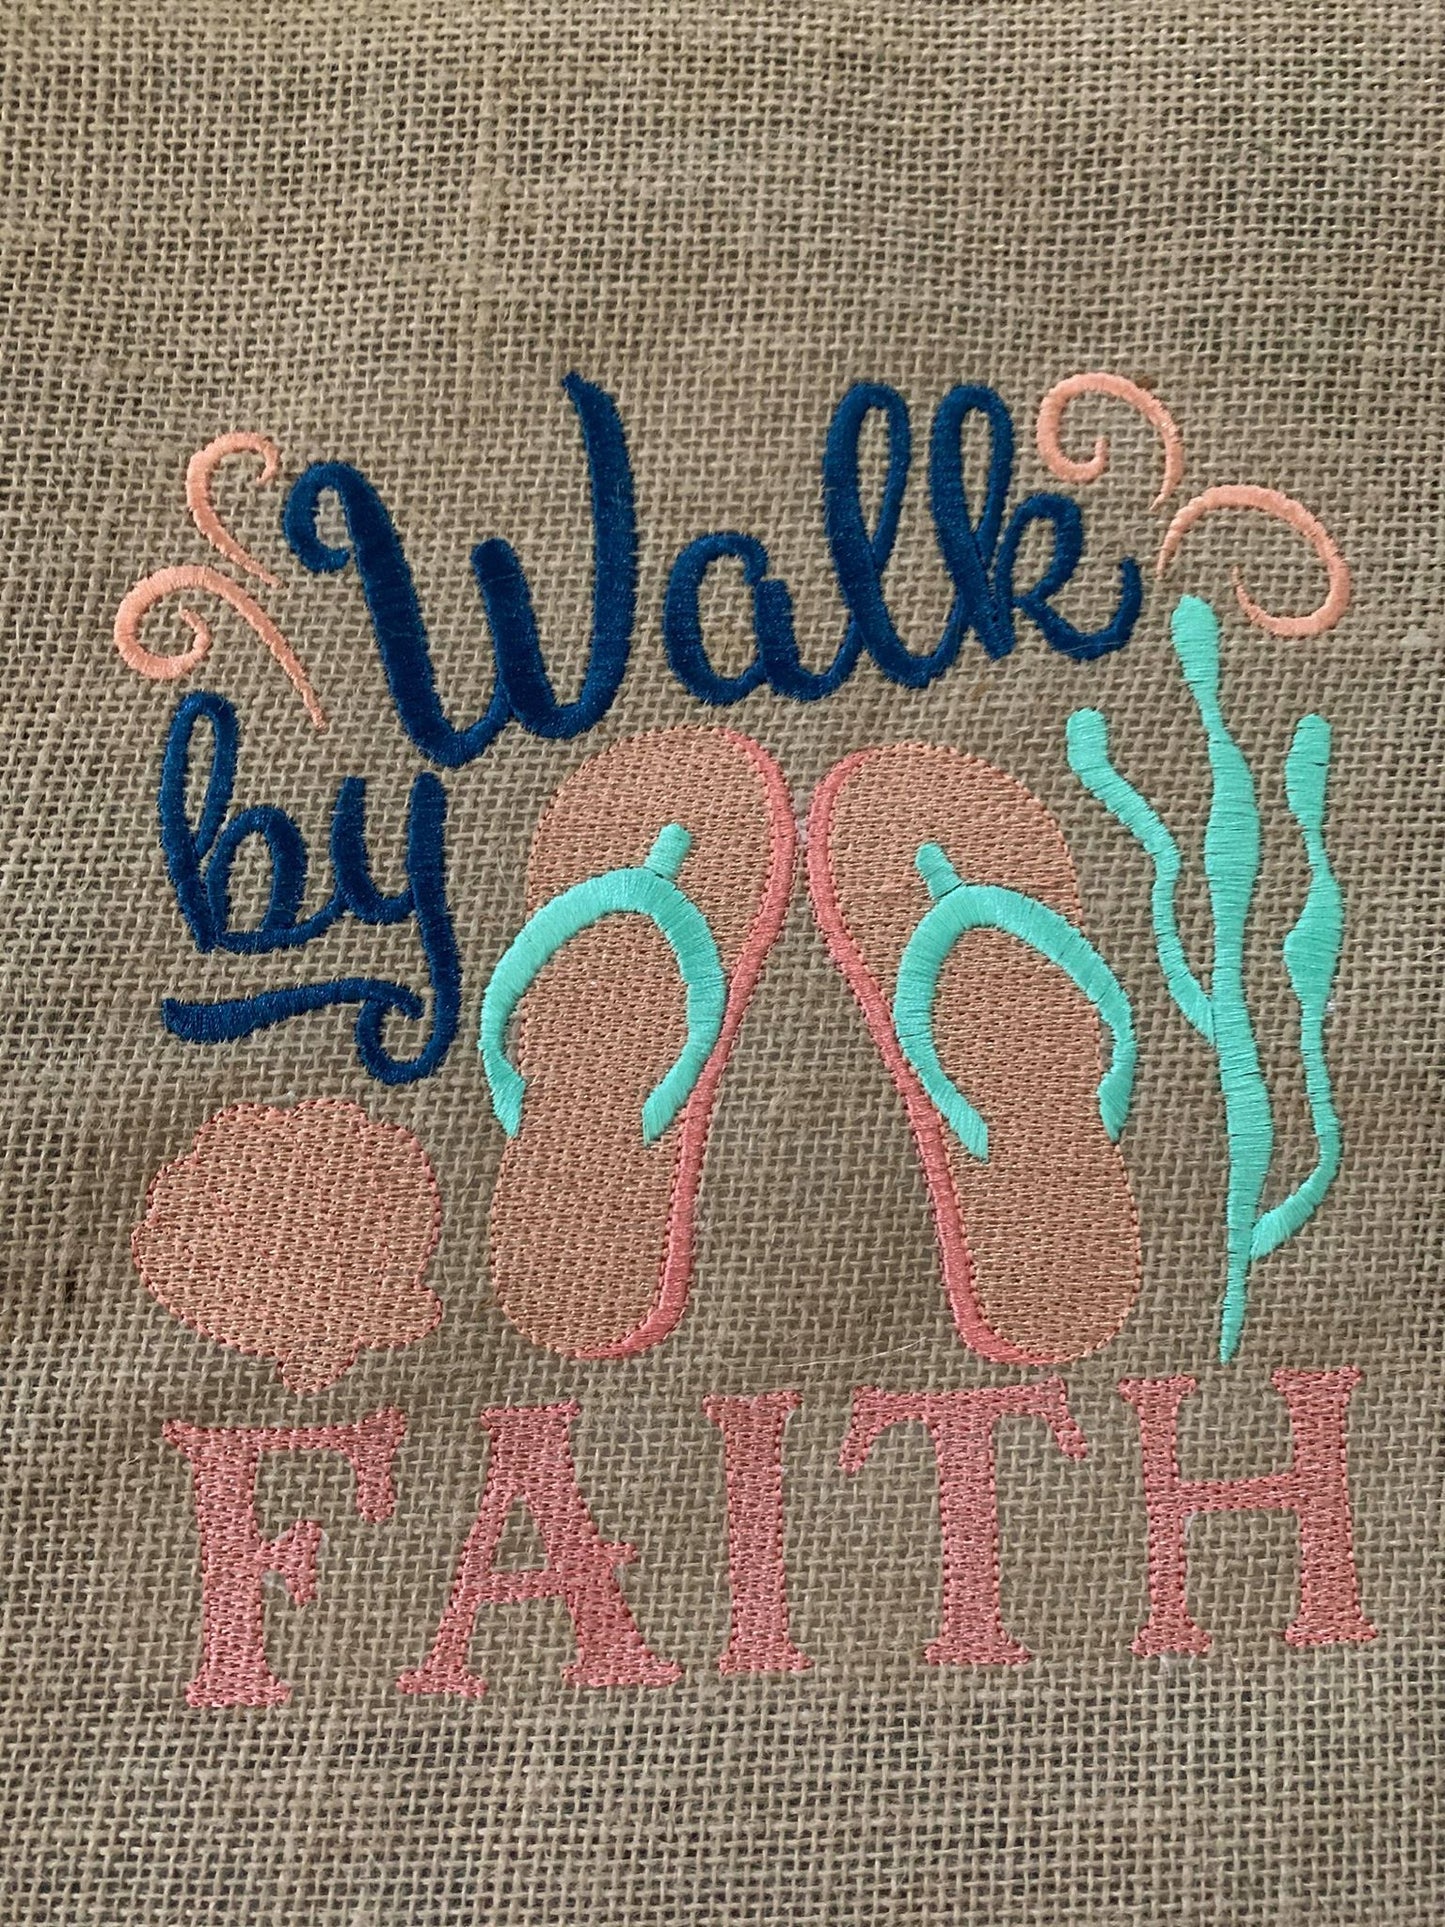 Walk By Faith - 4 Sizes - Digital Embroidery Design